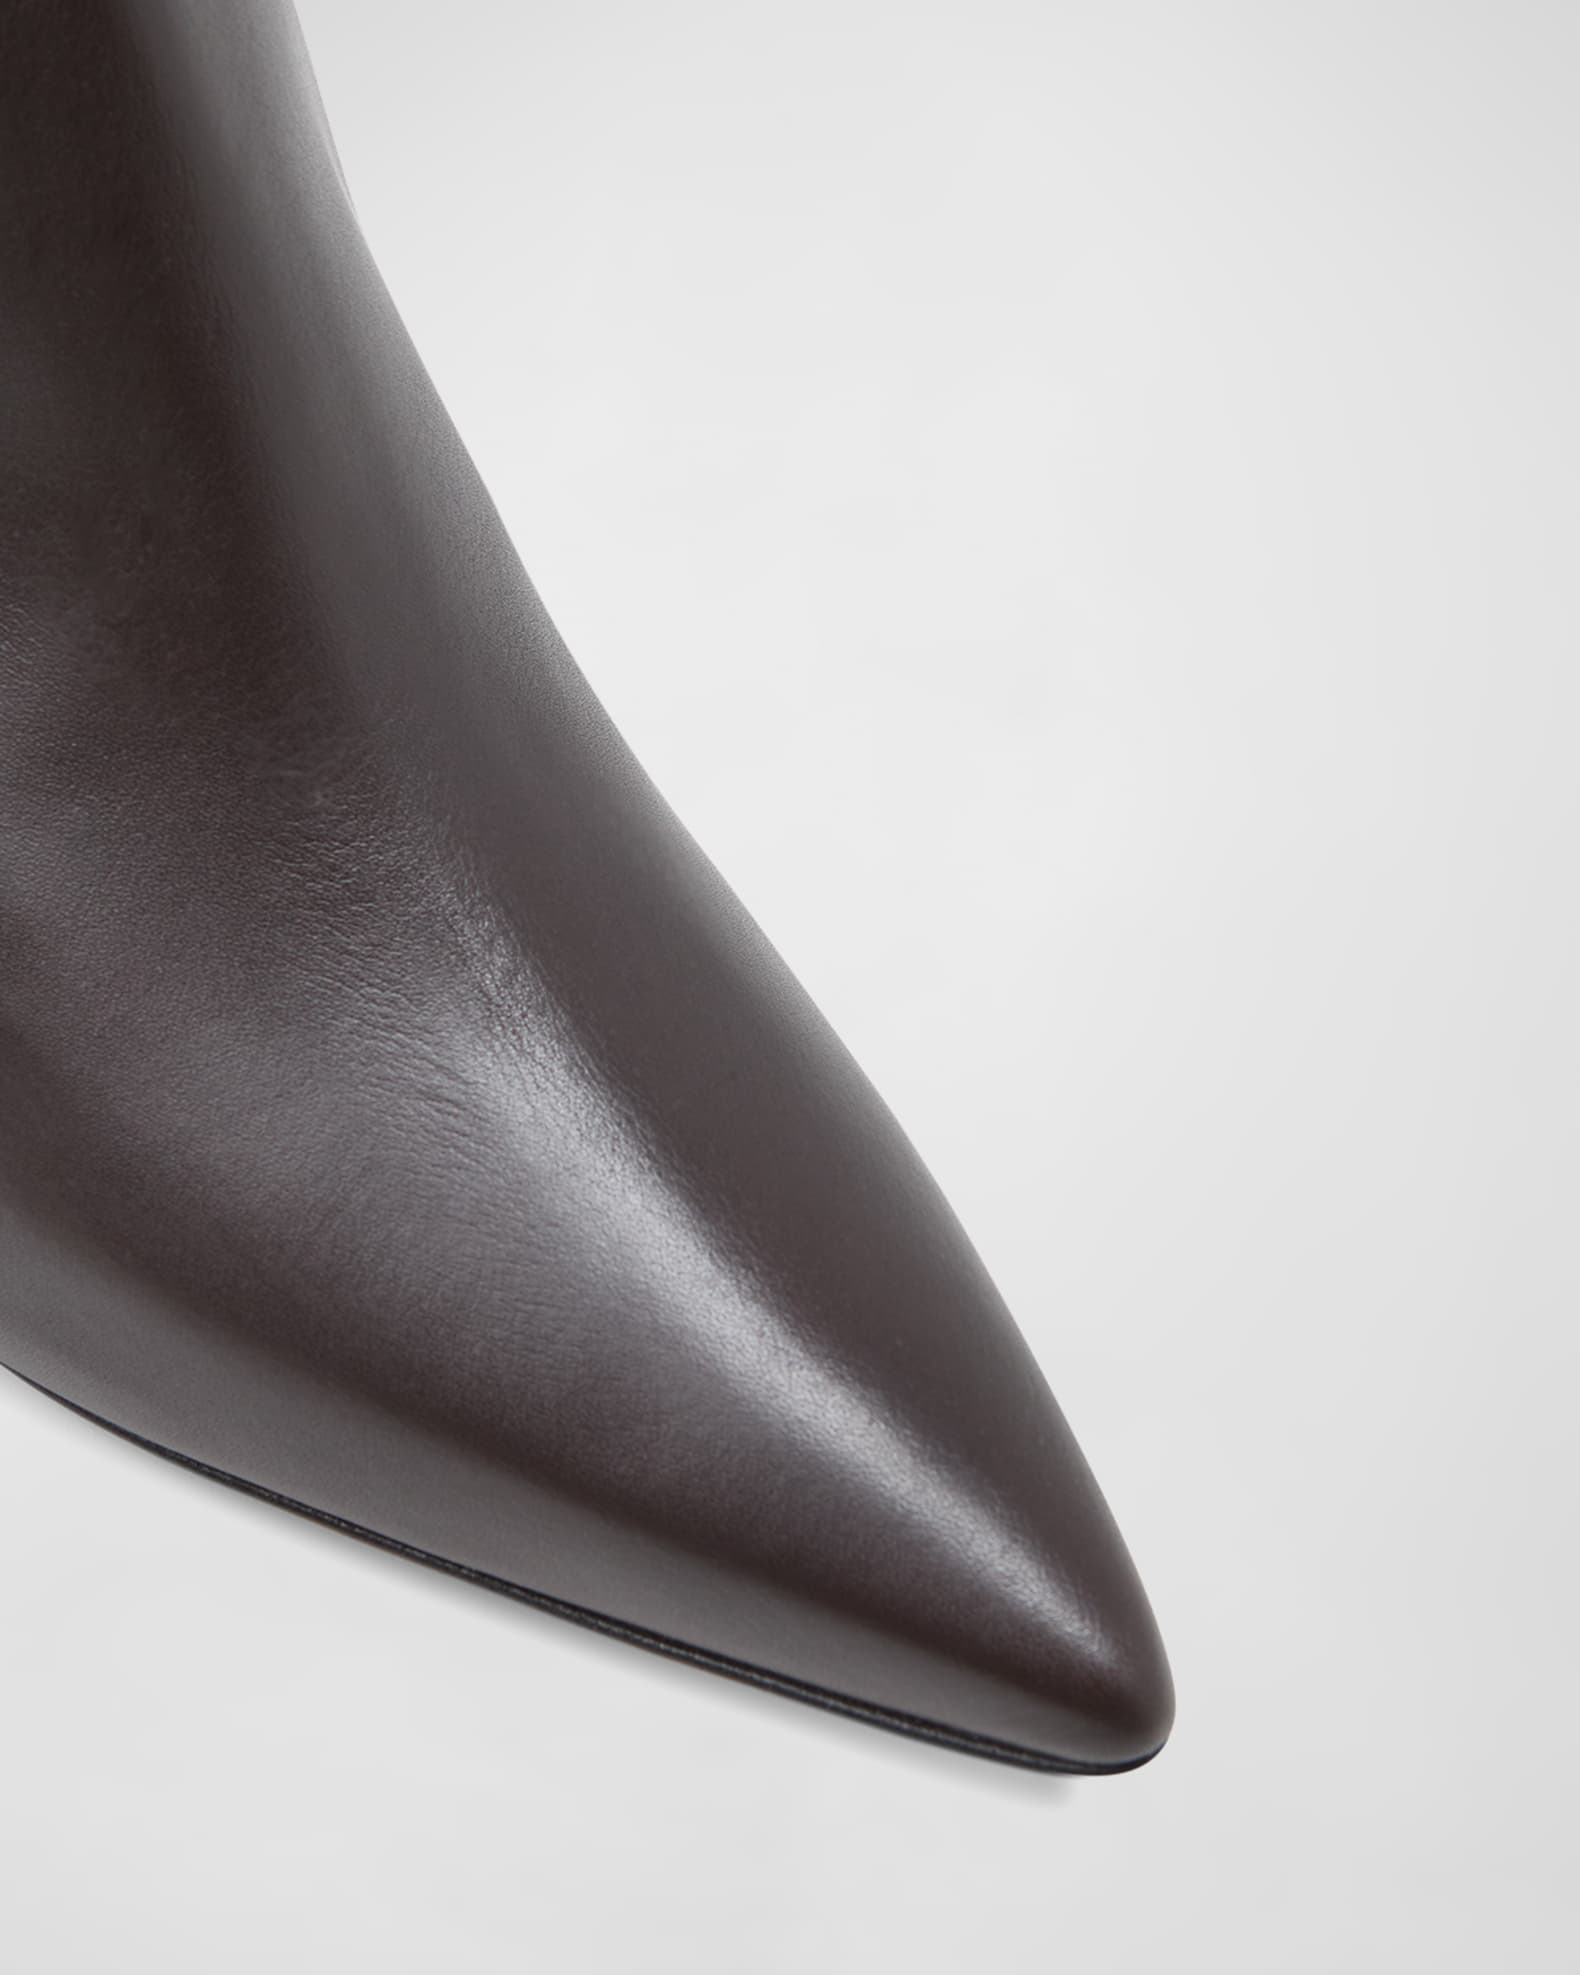 Manolo Blahnik Agnetapla Leather Zip Ankle Boots | Neiman Marcus